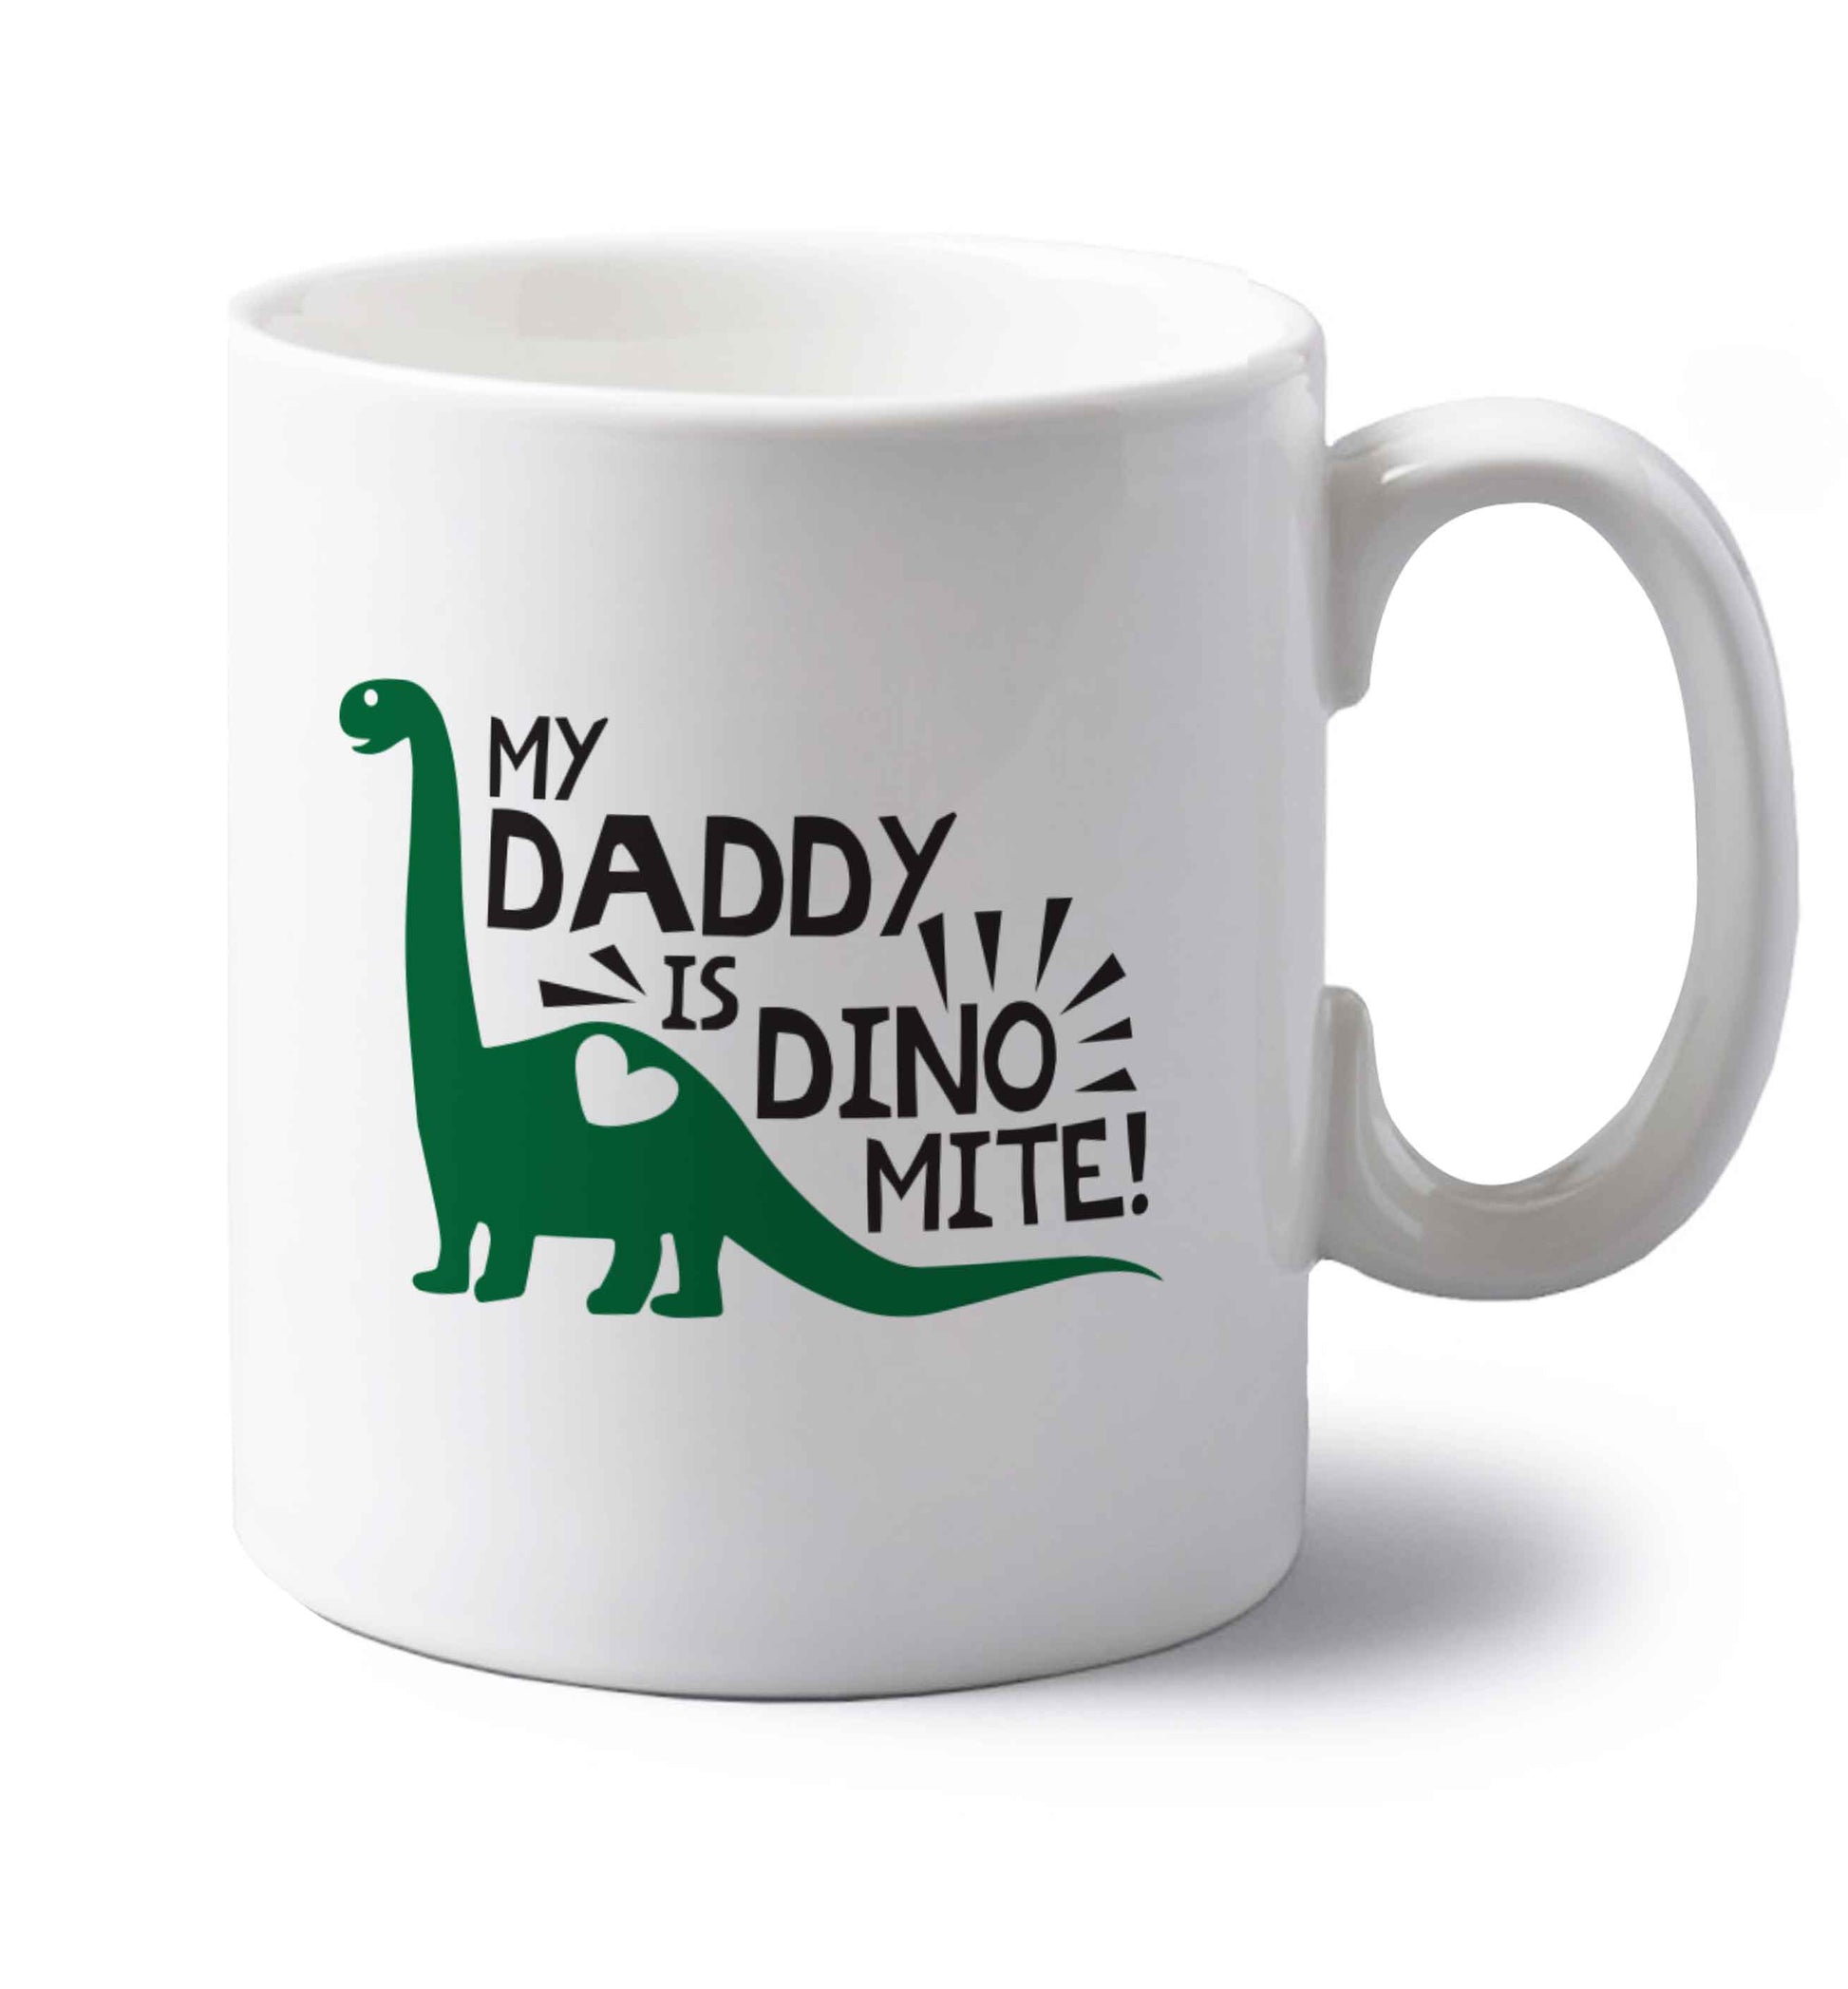 My daddy is dinomite! left handed white ceramic mug 